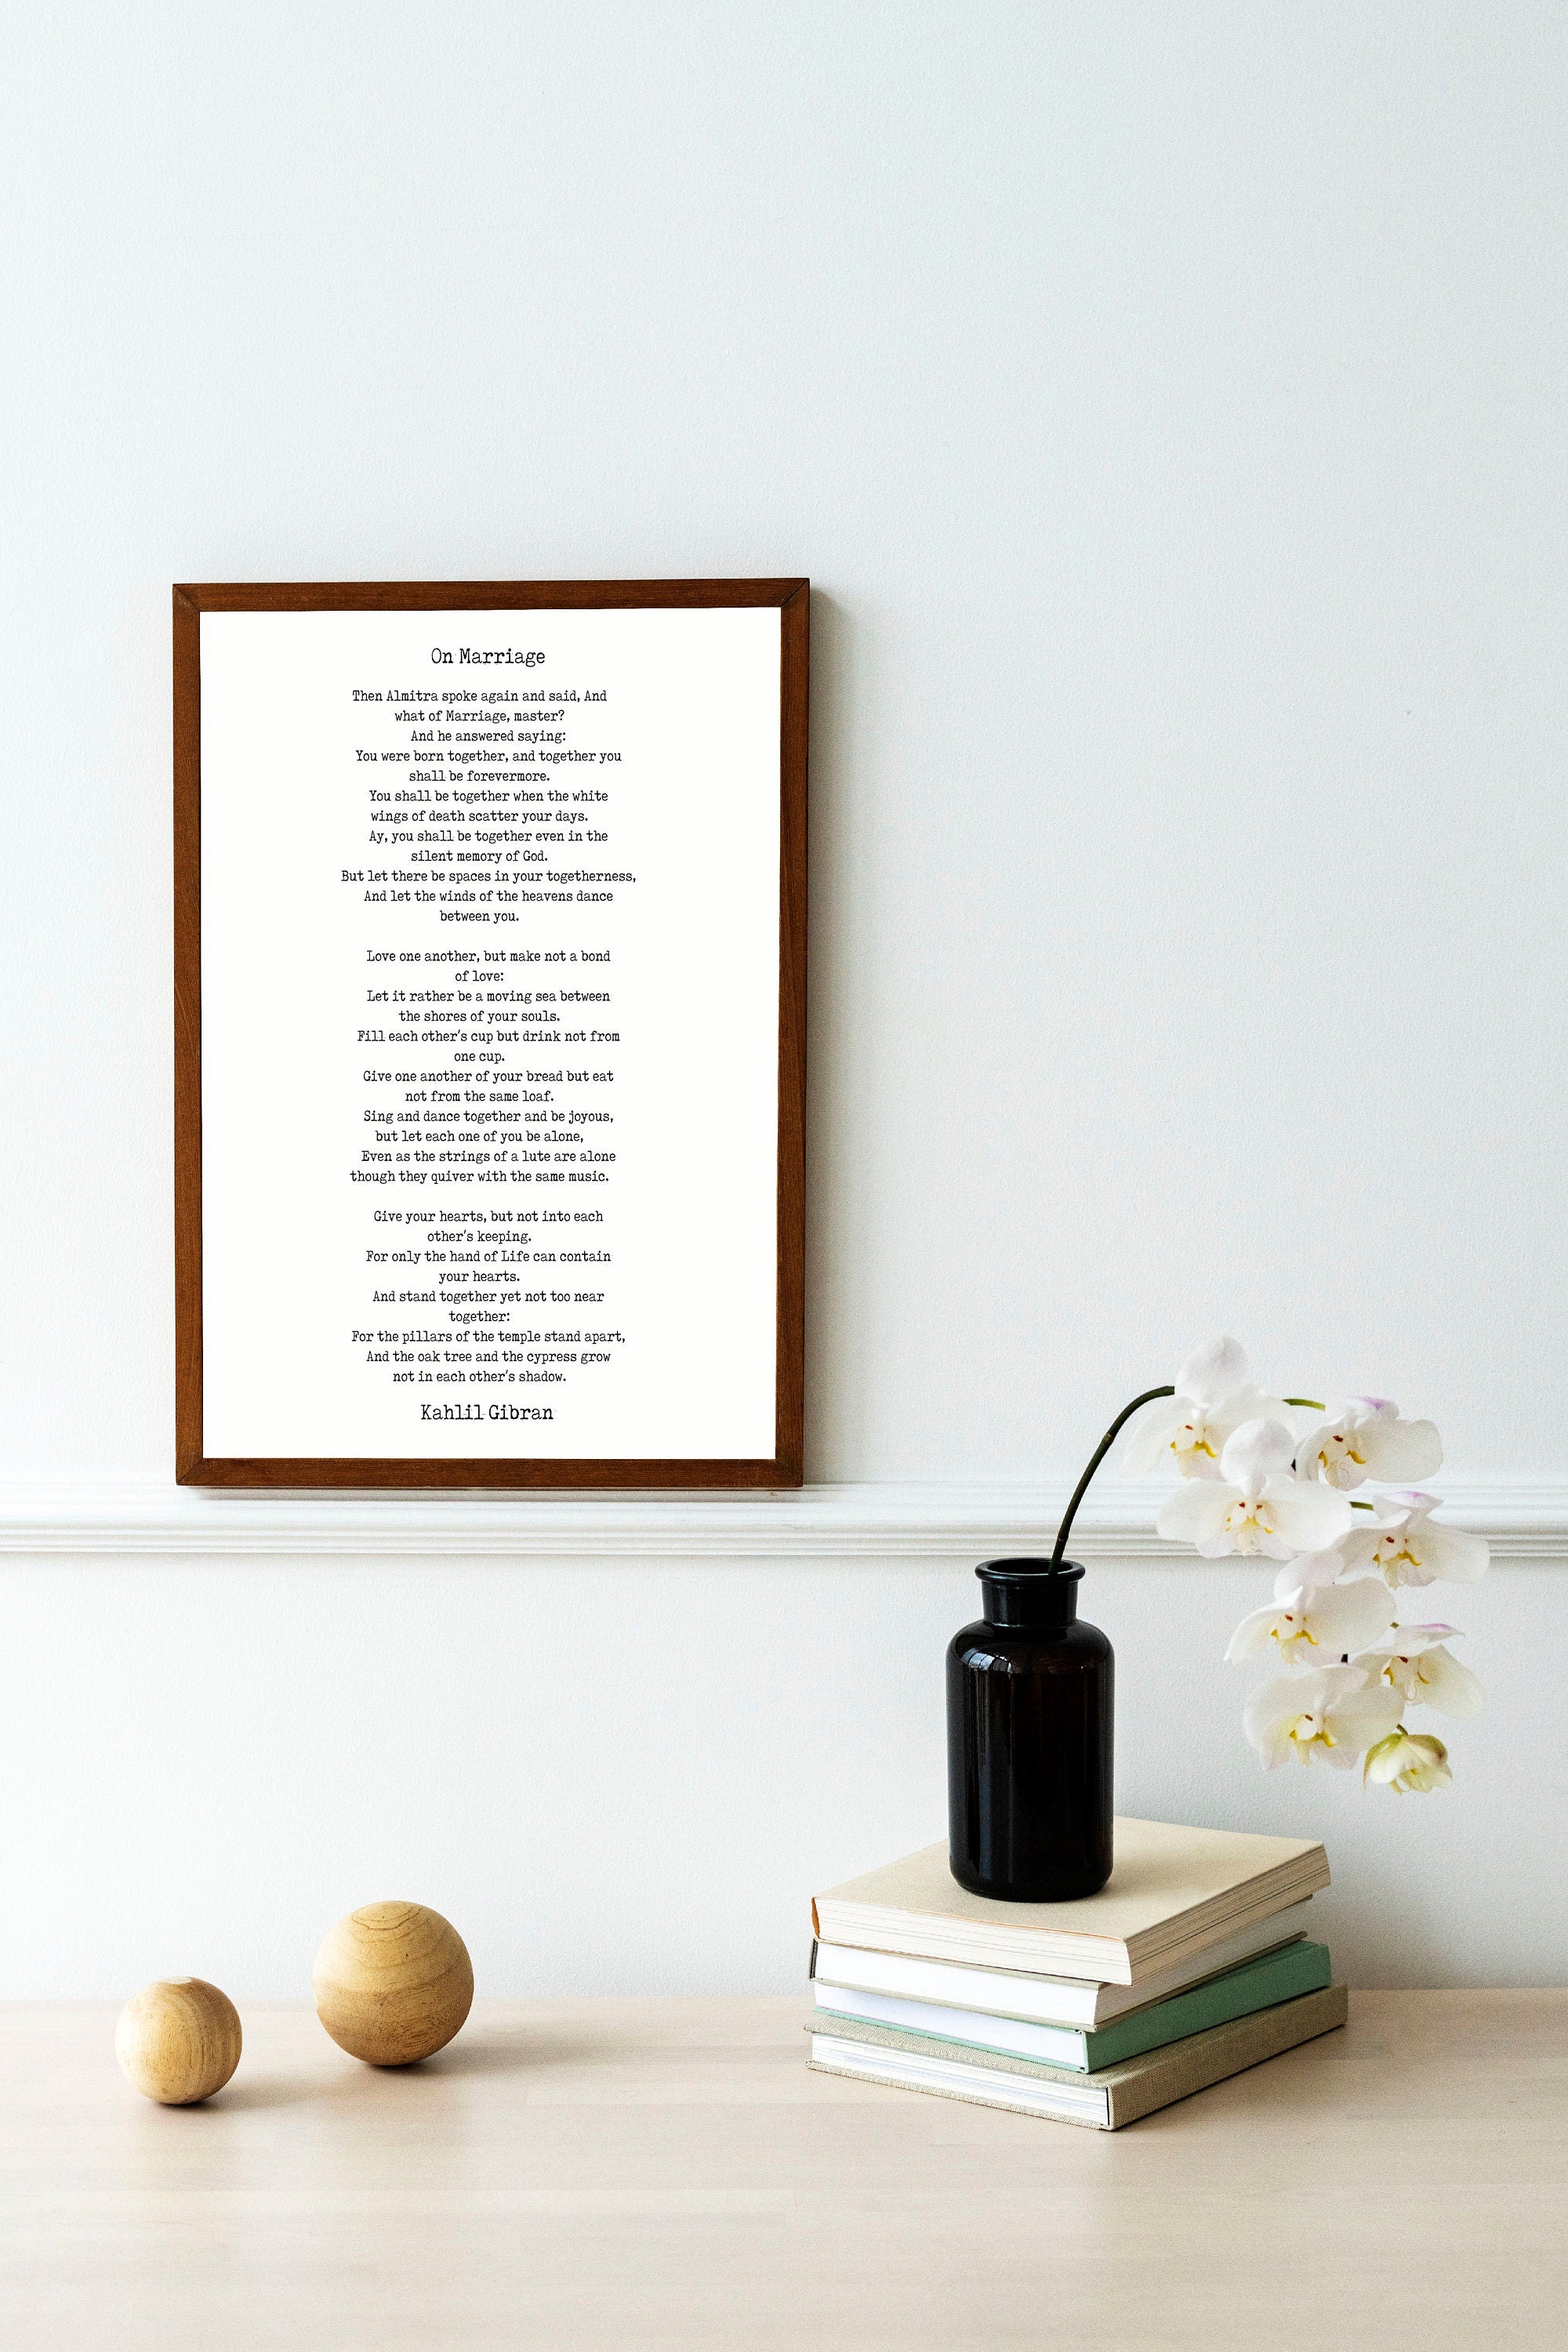 On Marriage Poem Kahlil Gibran Wall Art Prints Framed or Unframed in Vintage or Black & White, Love Poetry Literary Wall Art Decor